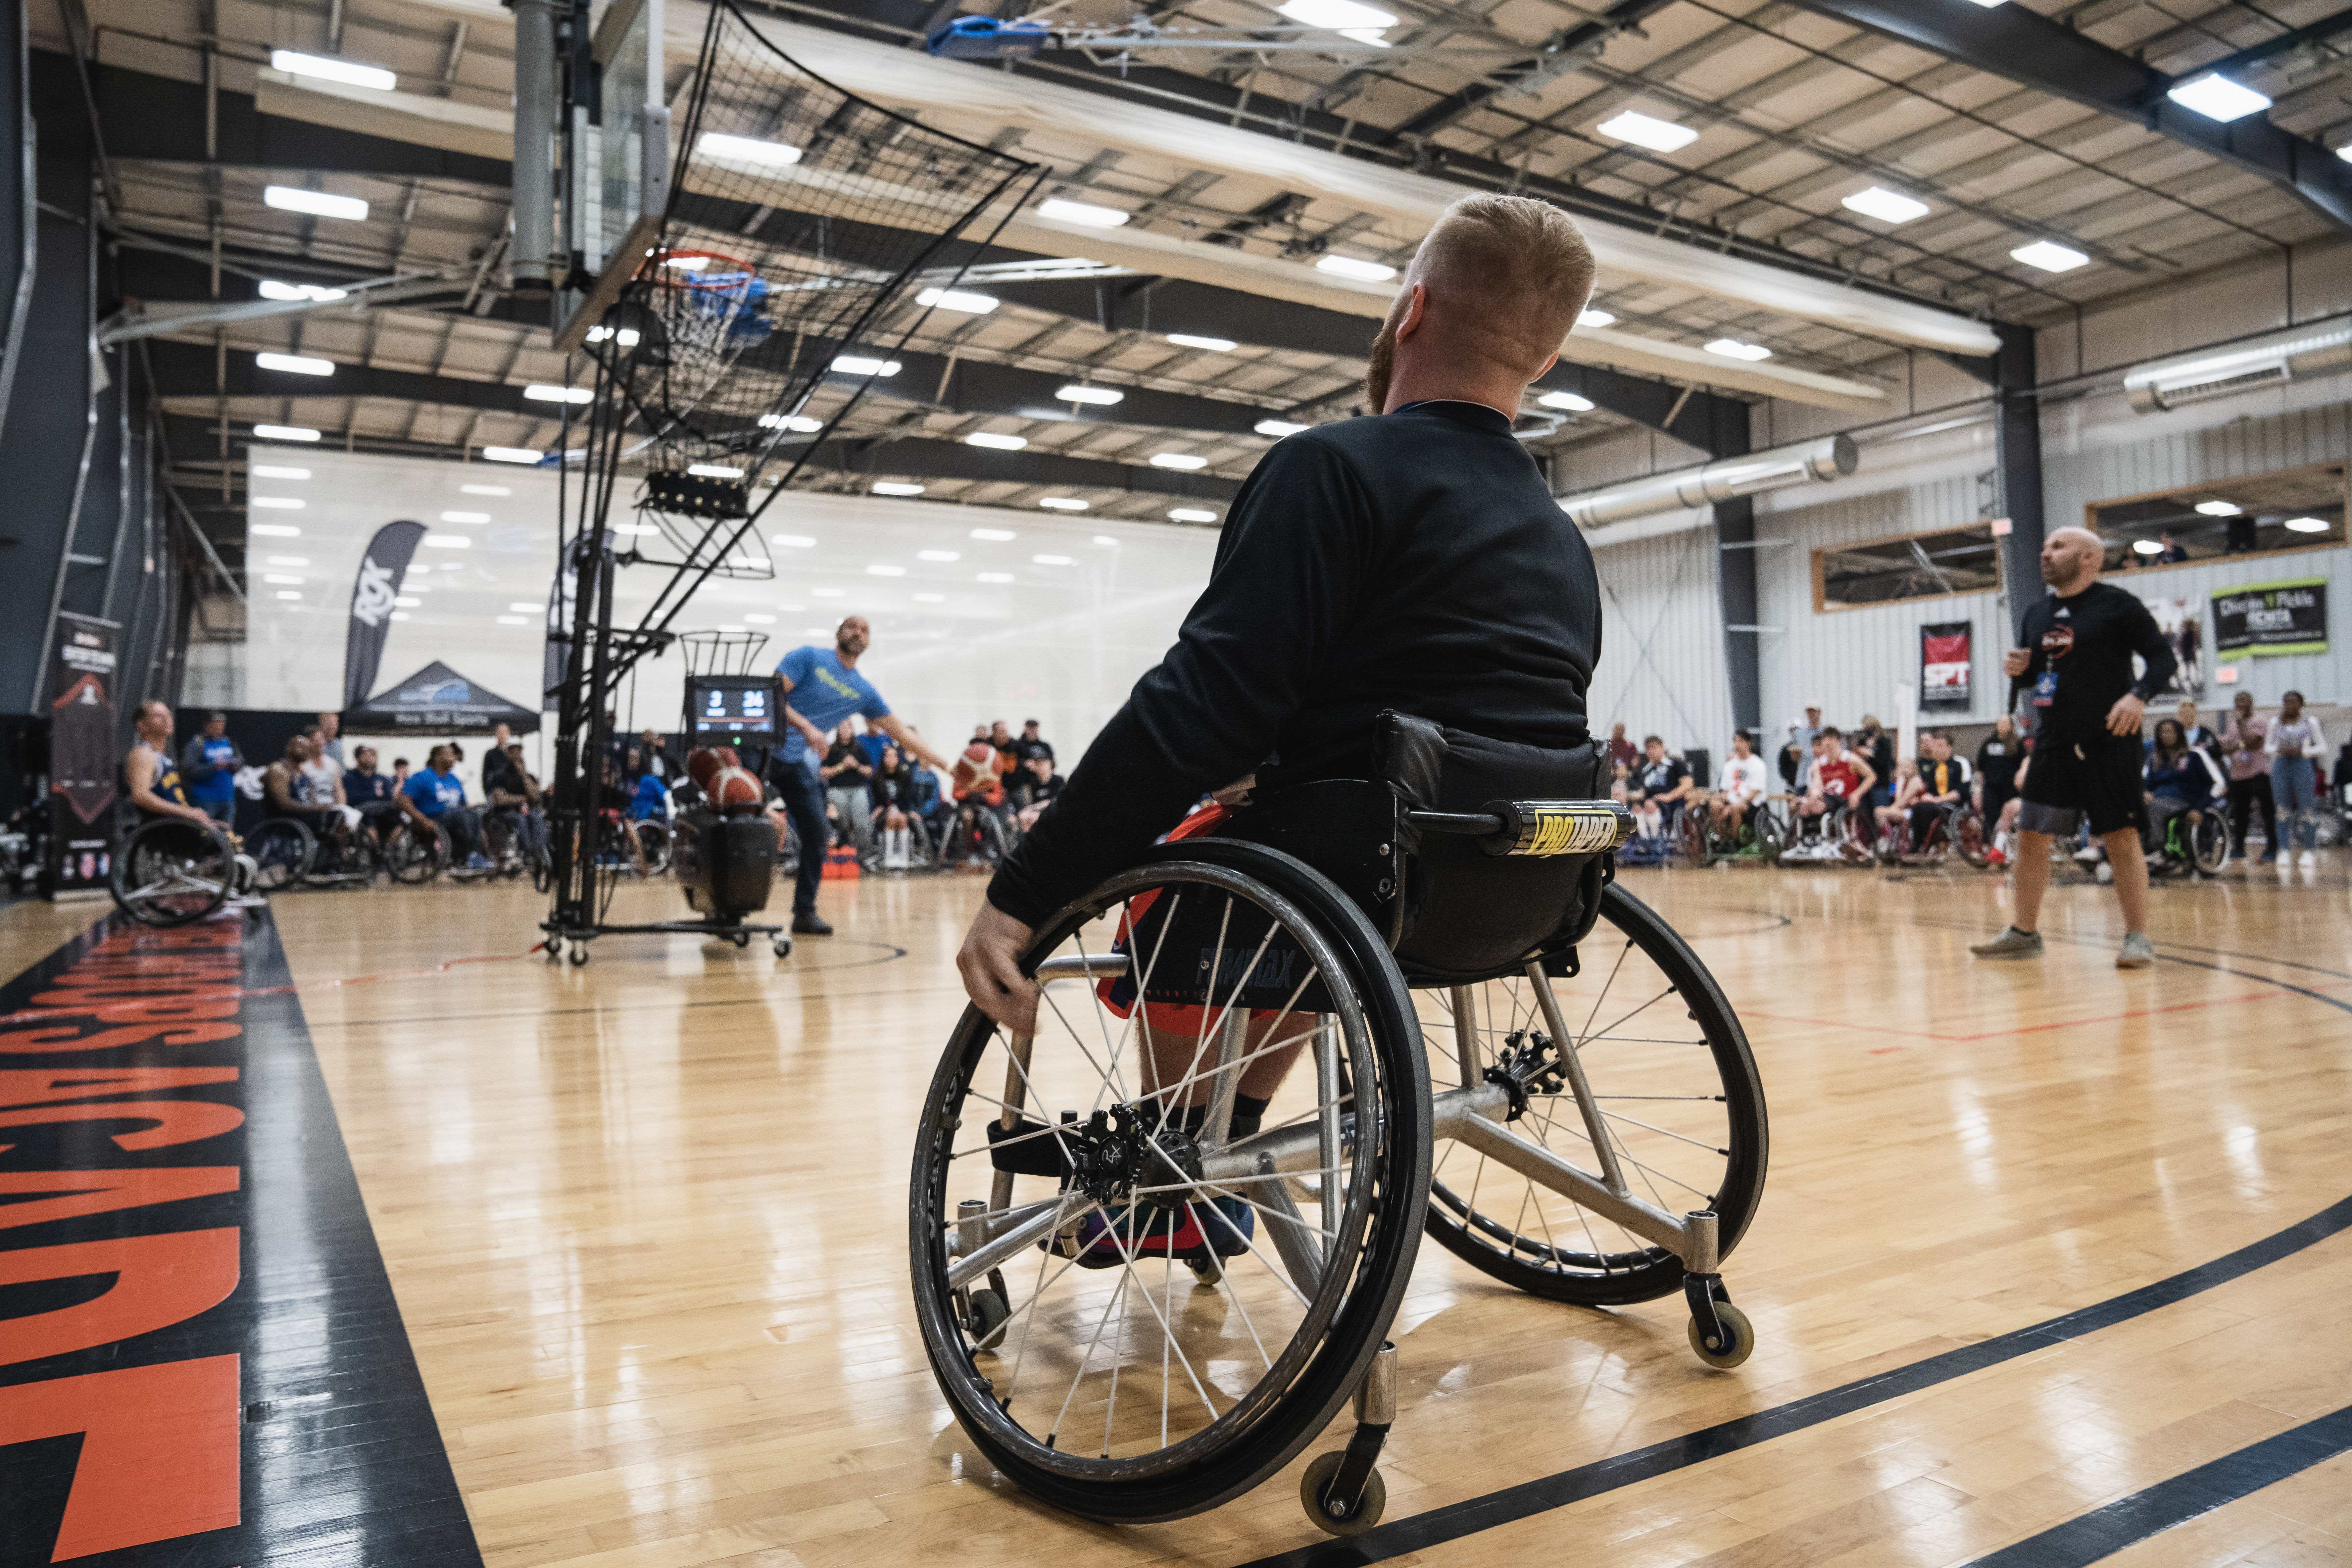 2022 NWBA National Wheelchair Basketball Championships